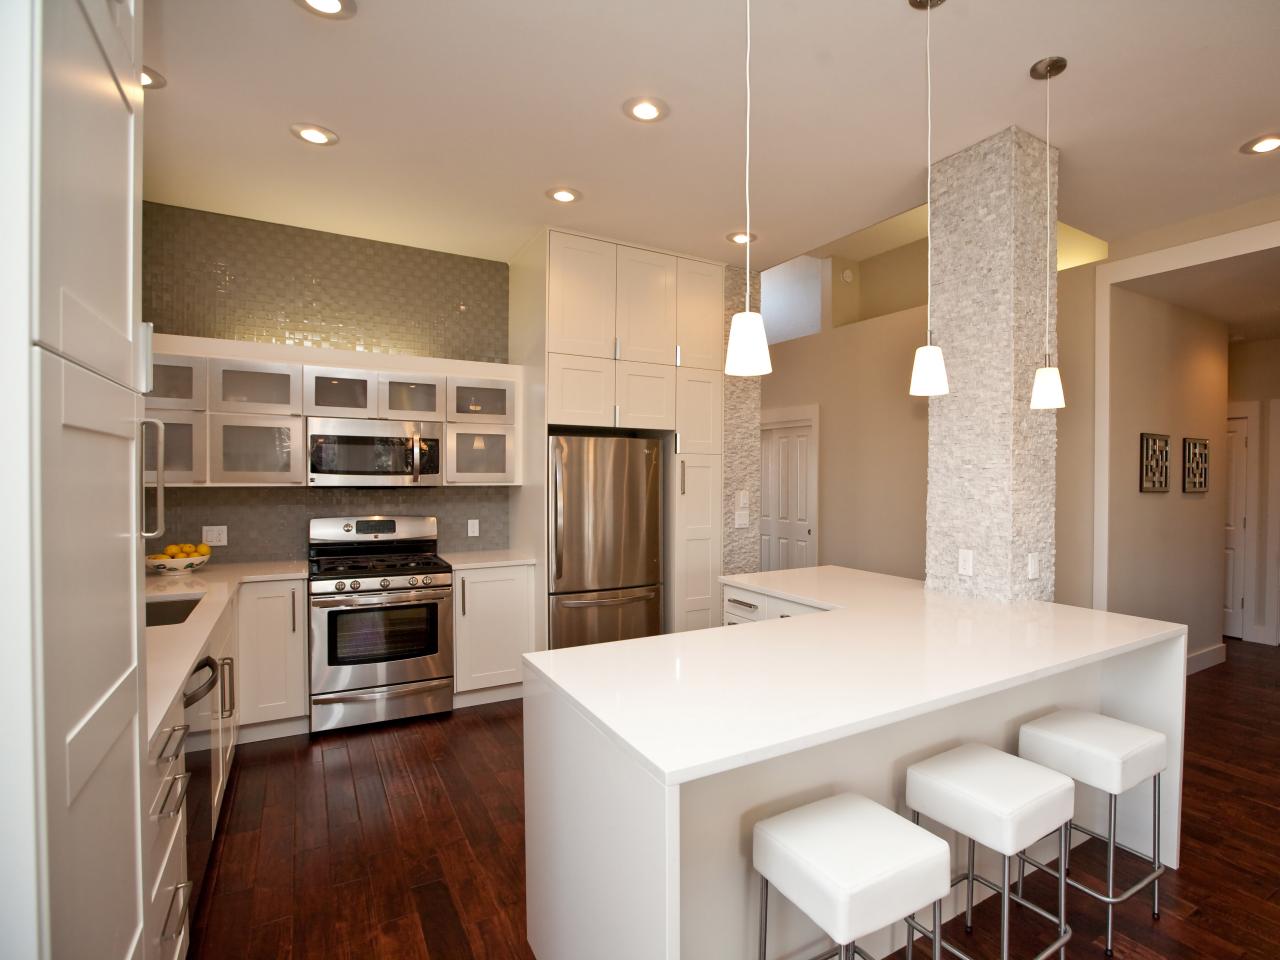 Modern White Kitchen Set on Hardwood Floors in an Open